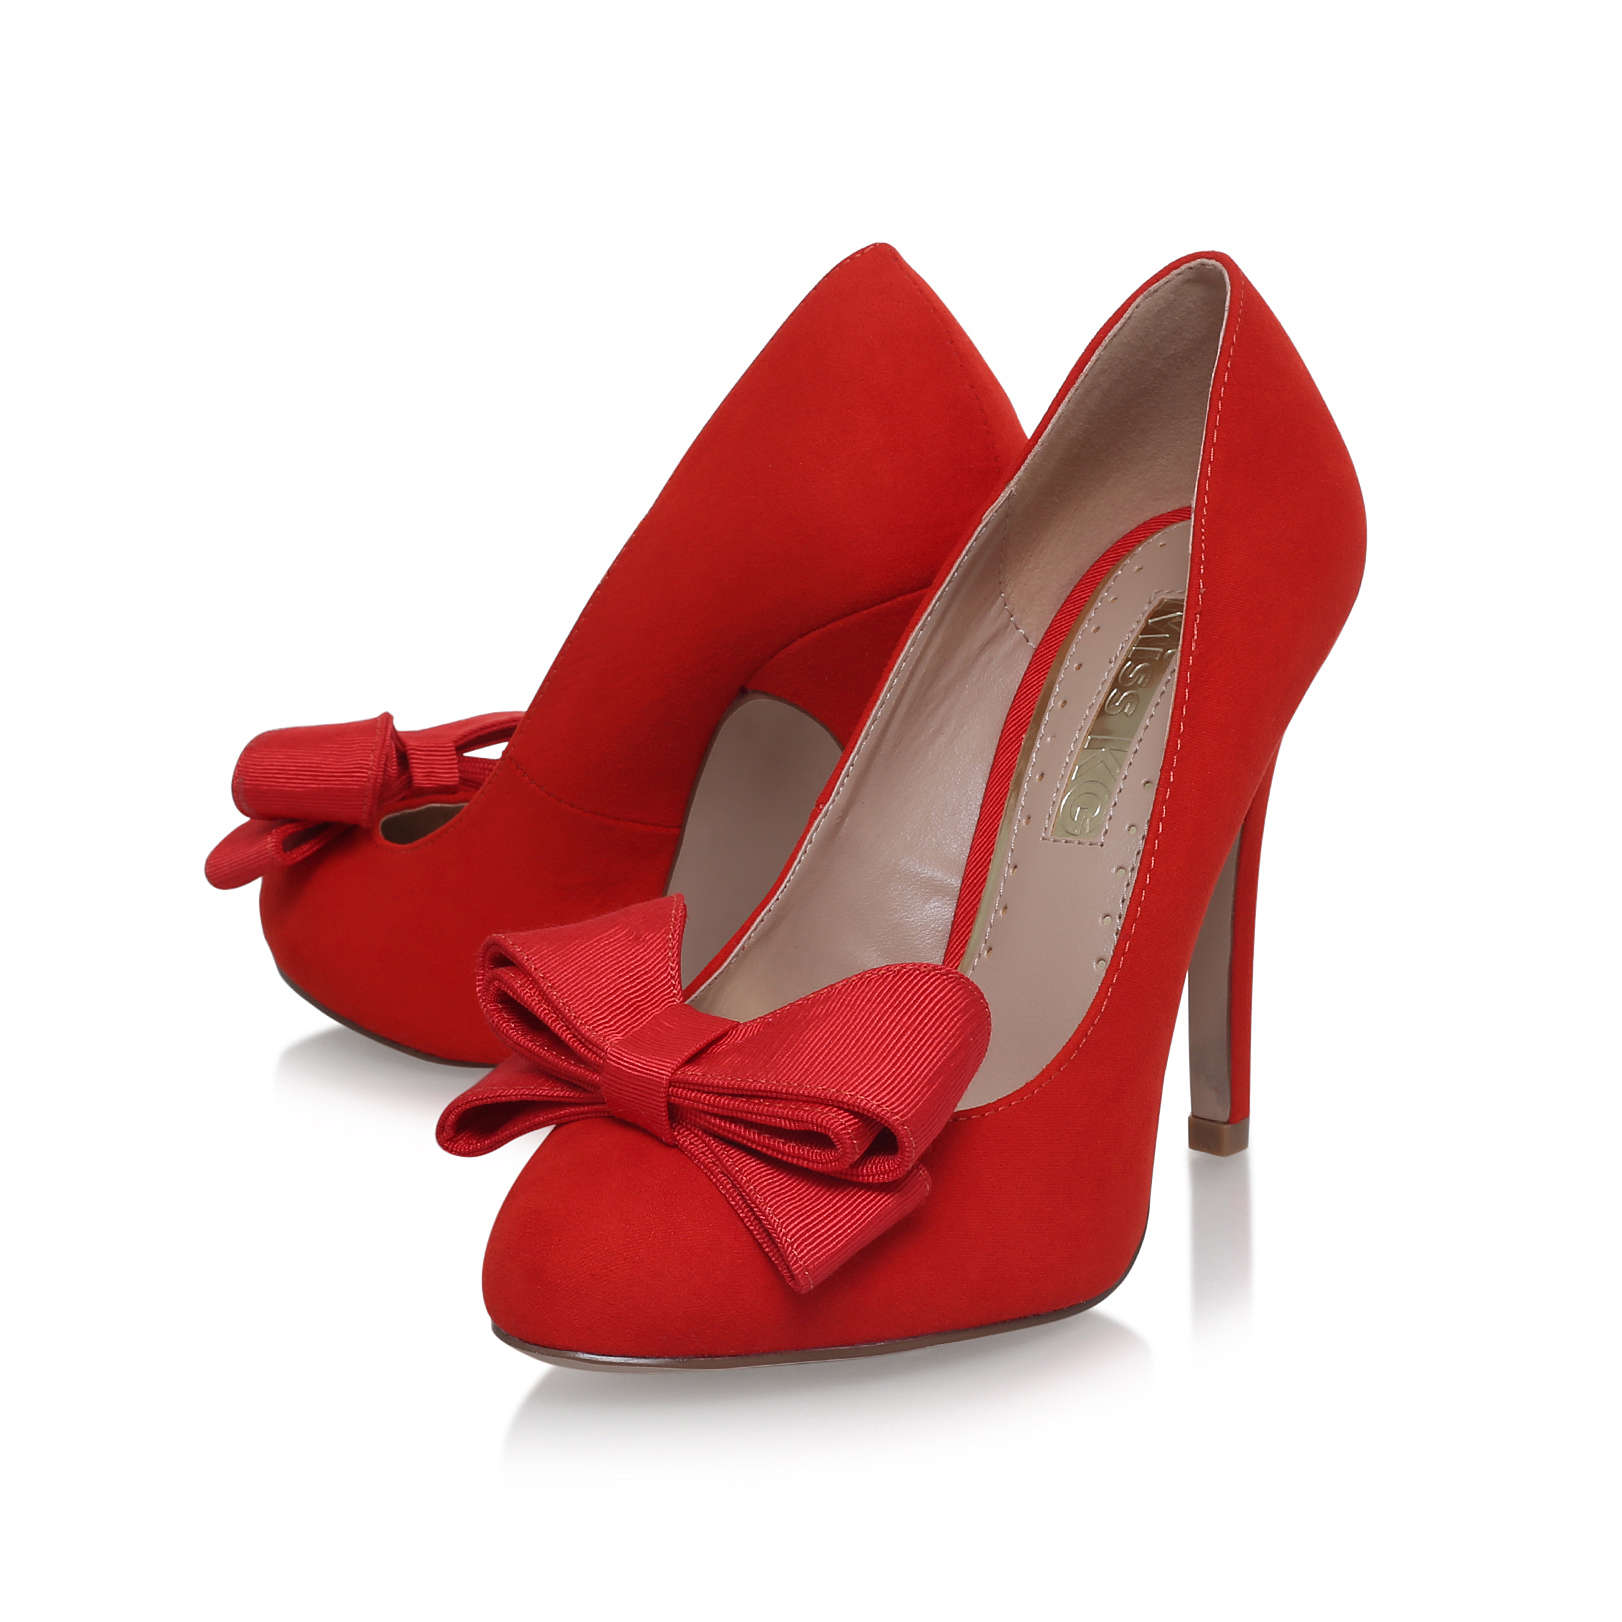 GEM Miss KG Gem Red Bow High Heel Court Shoes by MISS KG